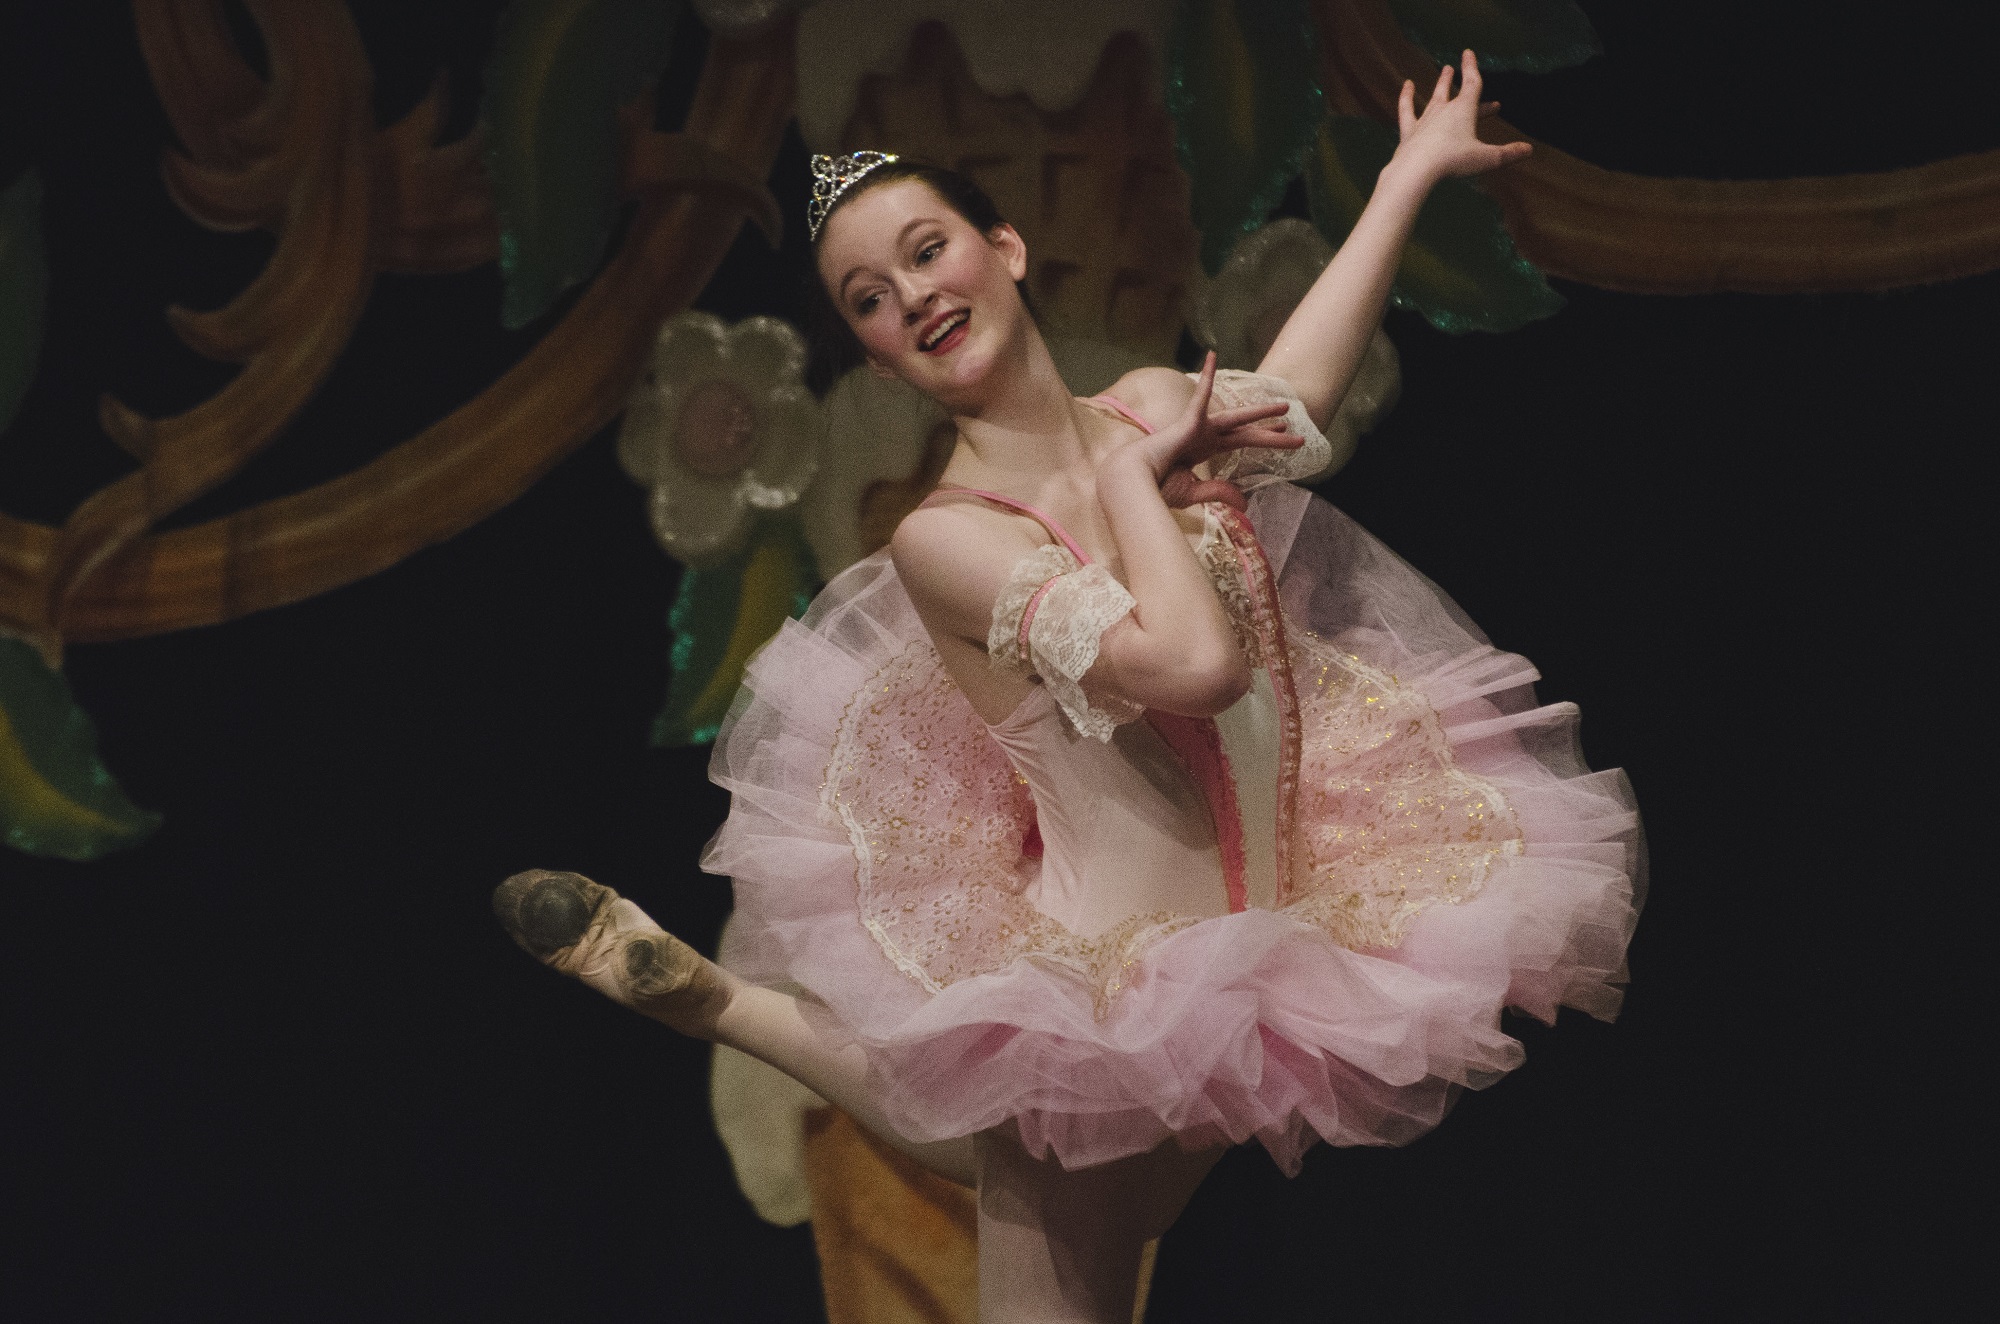 Orange-County-Events-in-December-Nutcracker-Ballet